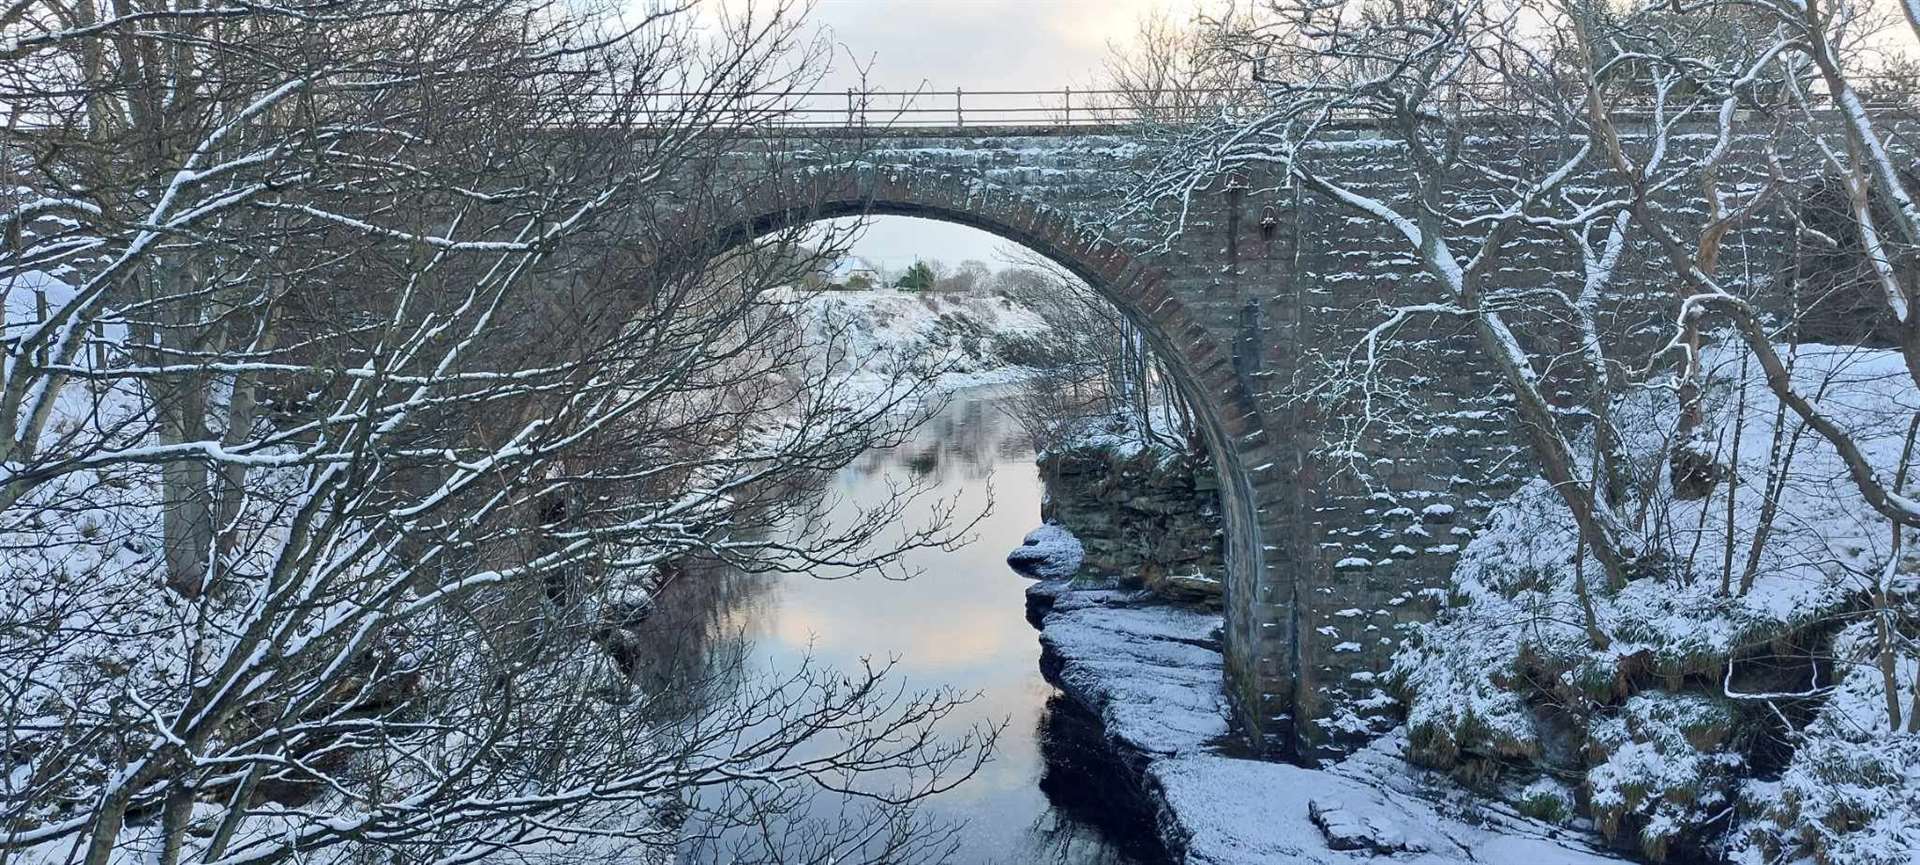 The River Brora running underneath Brora Bridge in the snow. Photo: Justine Clark